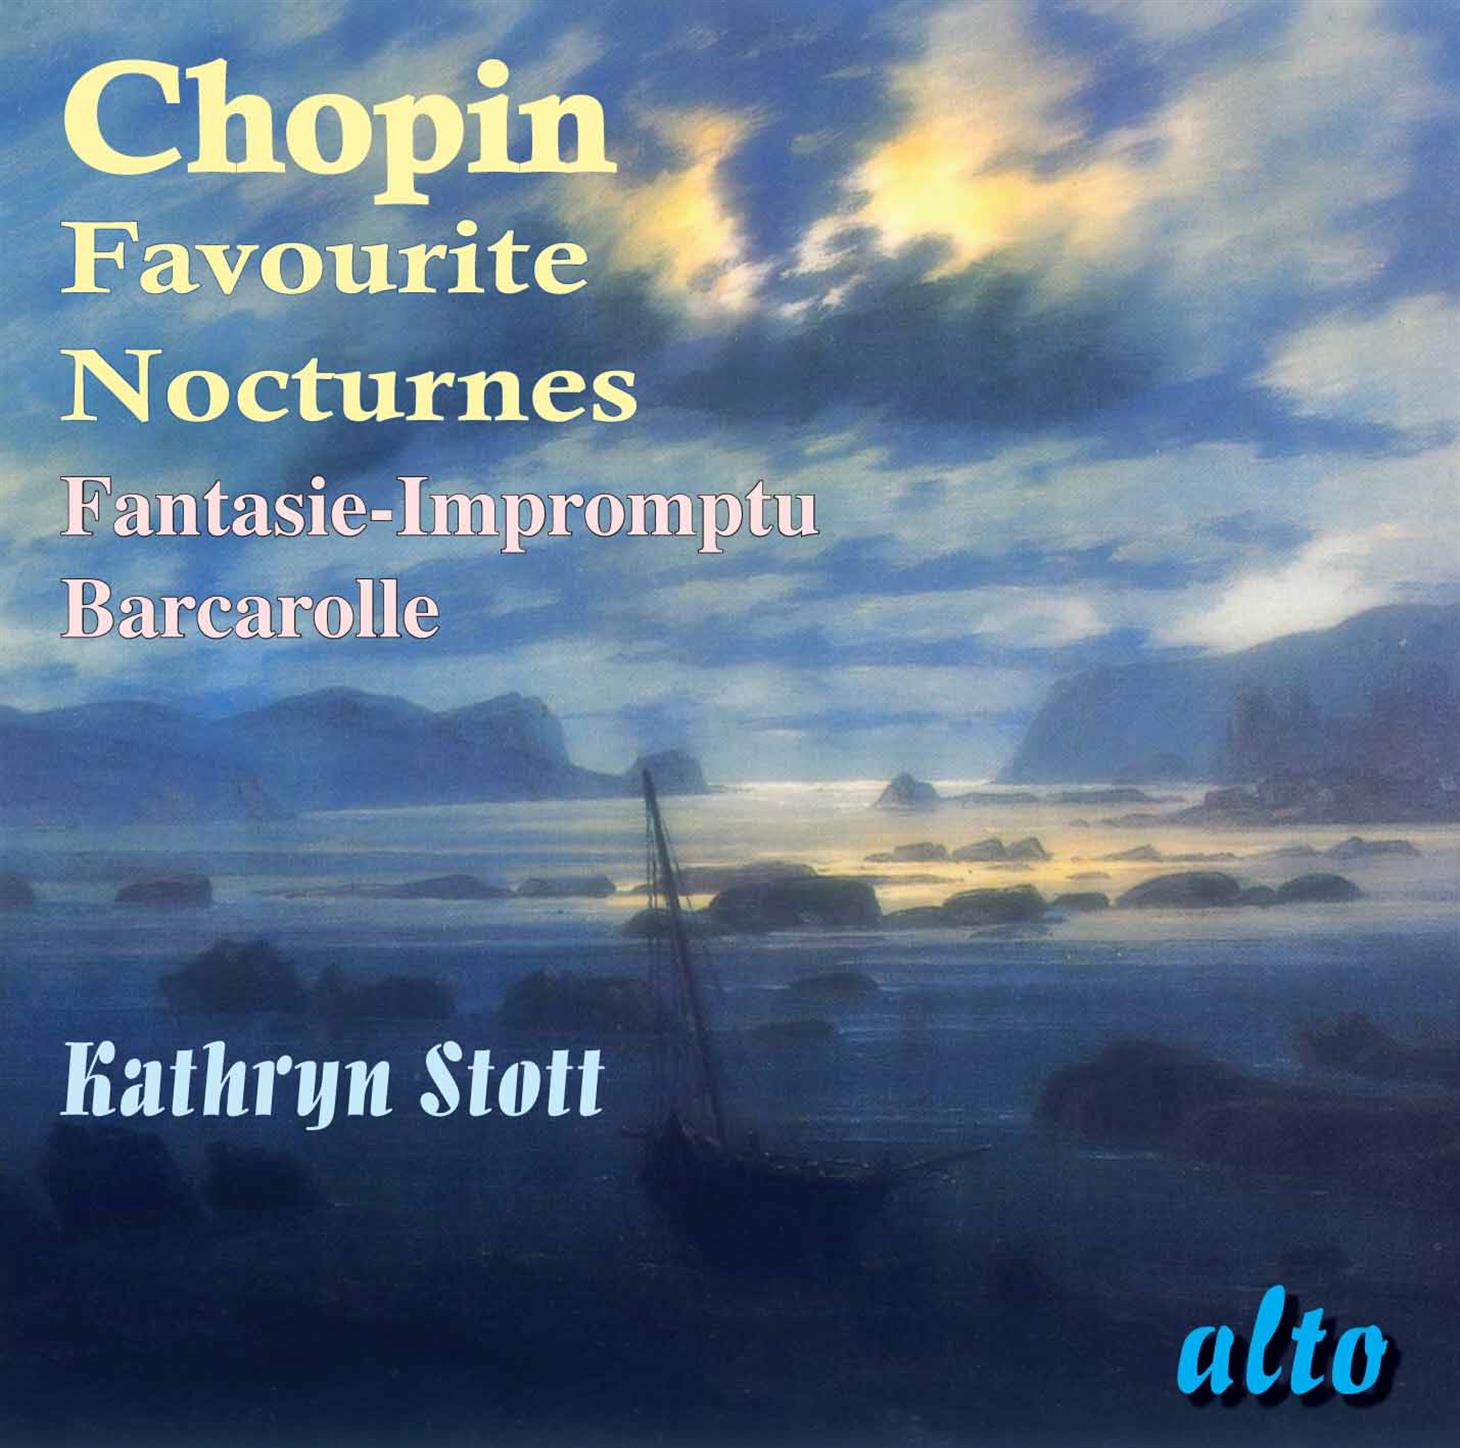 Nocturne in E flat major, Op. 9 no. 2: Nocturne in E flat major, Op. 9 no. 2